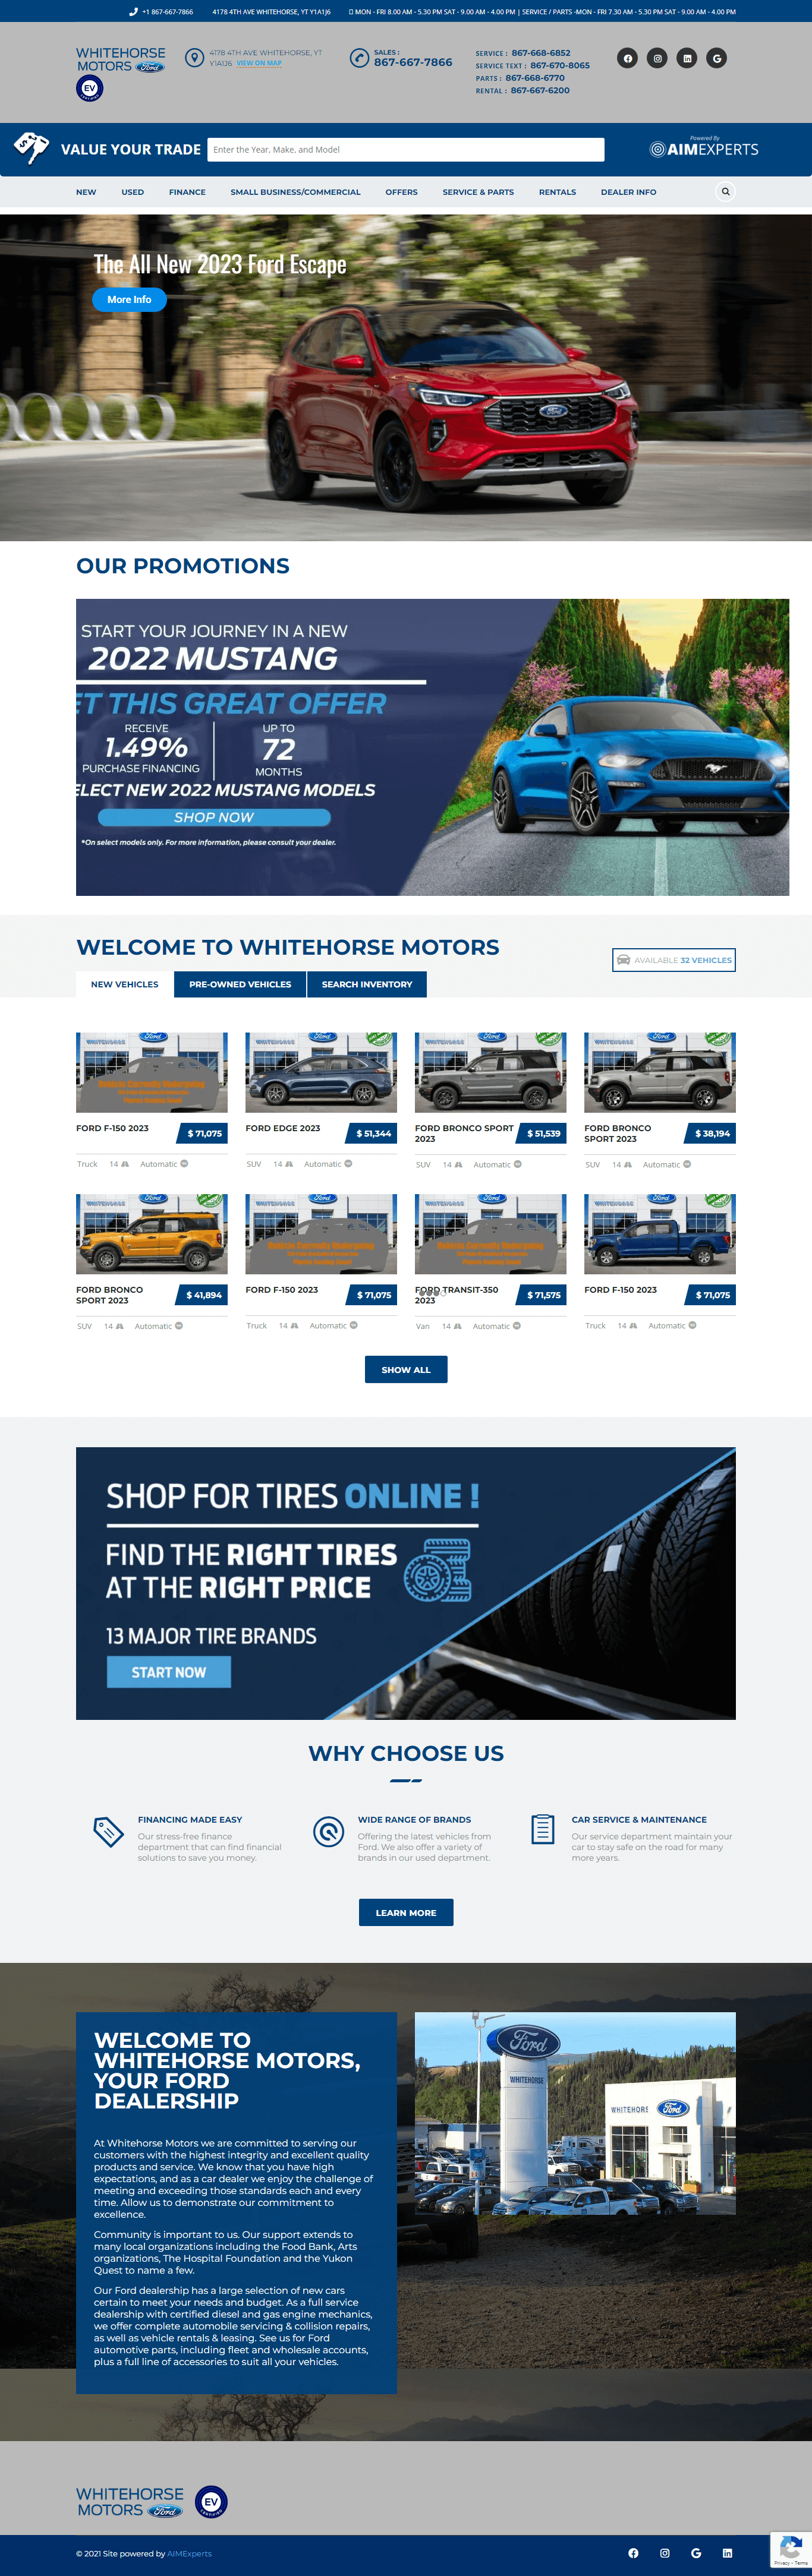 WhiteHorse Motors